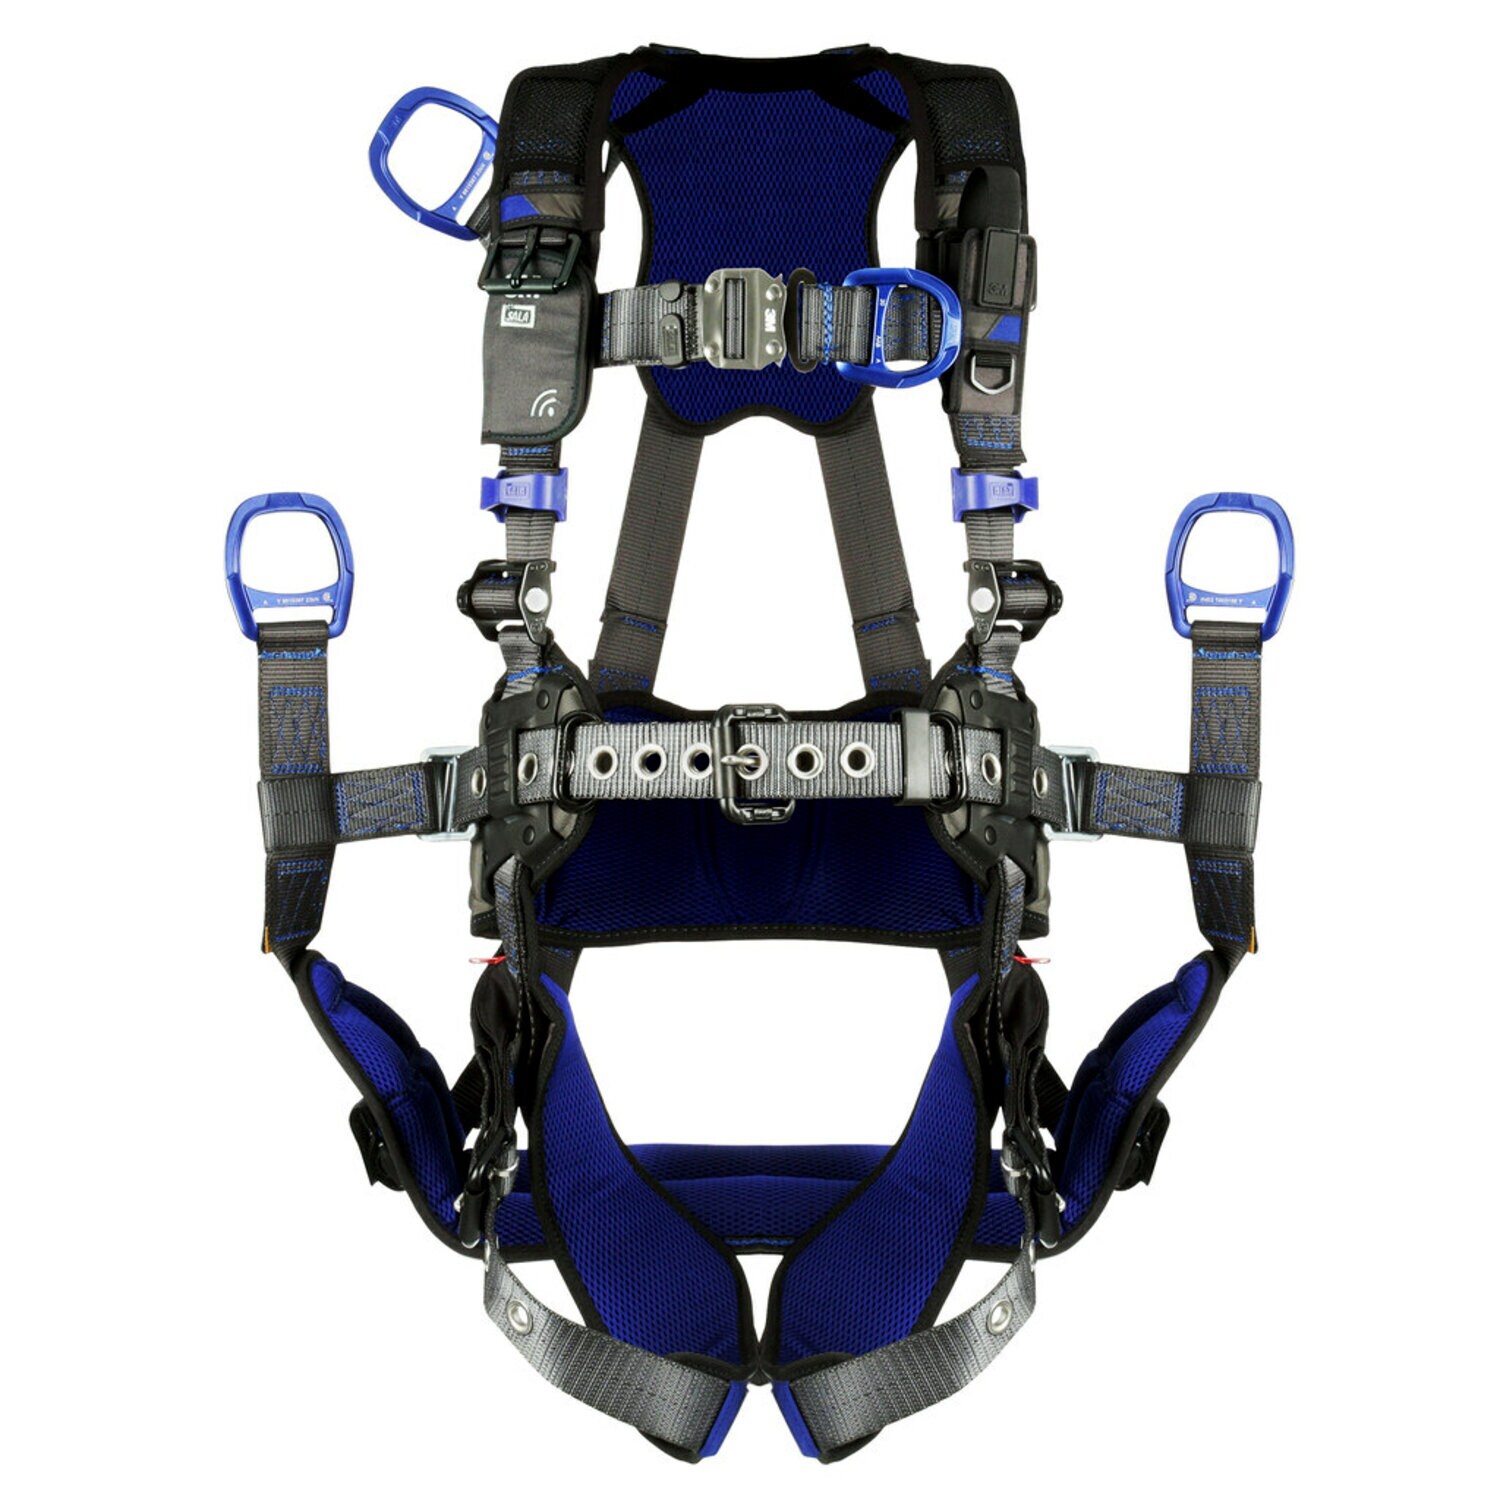 7100241700 - 3M DBI-SALA ExoFit X300 Comfort Oil & Gas Climbing/Suspension Safety
Harness 1113297, Large